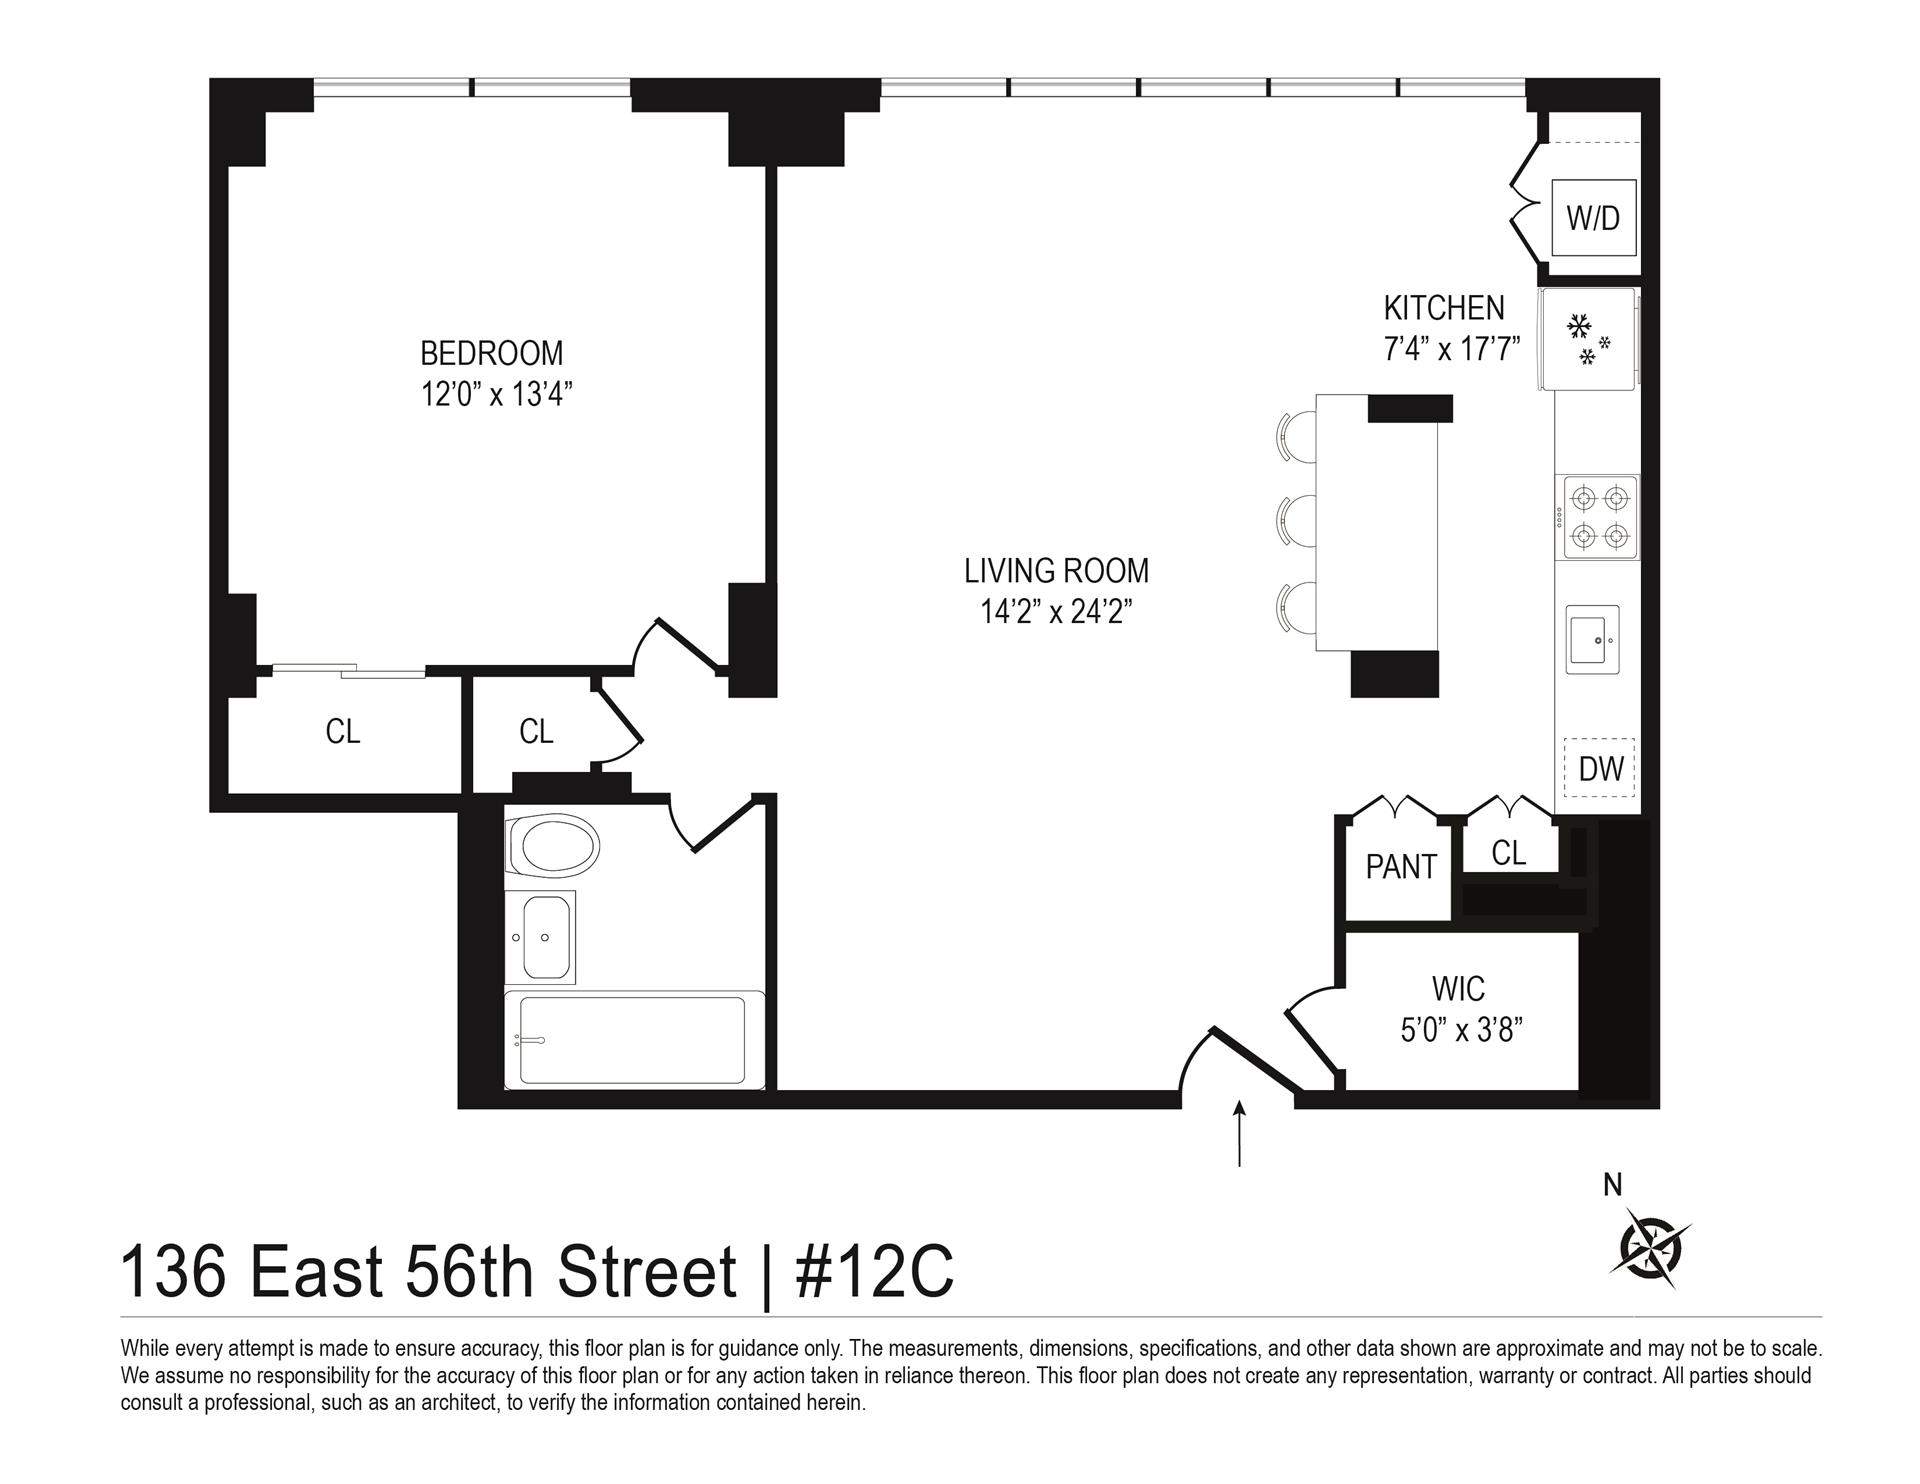 Floorplan for 136 East 56th Street, 12C